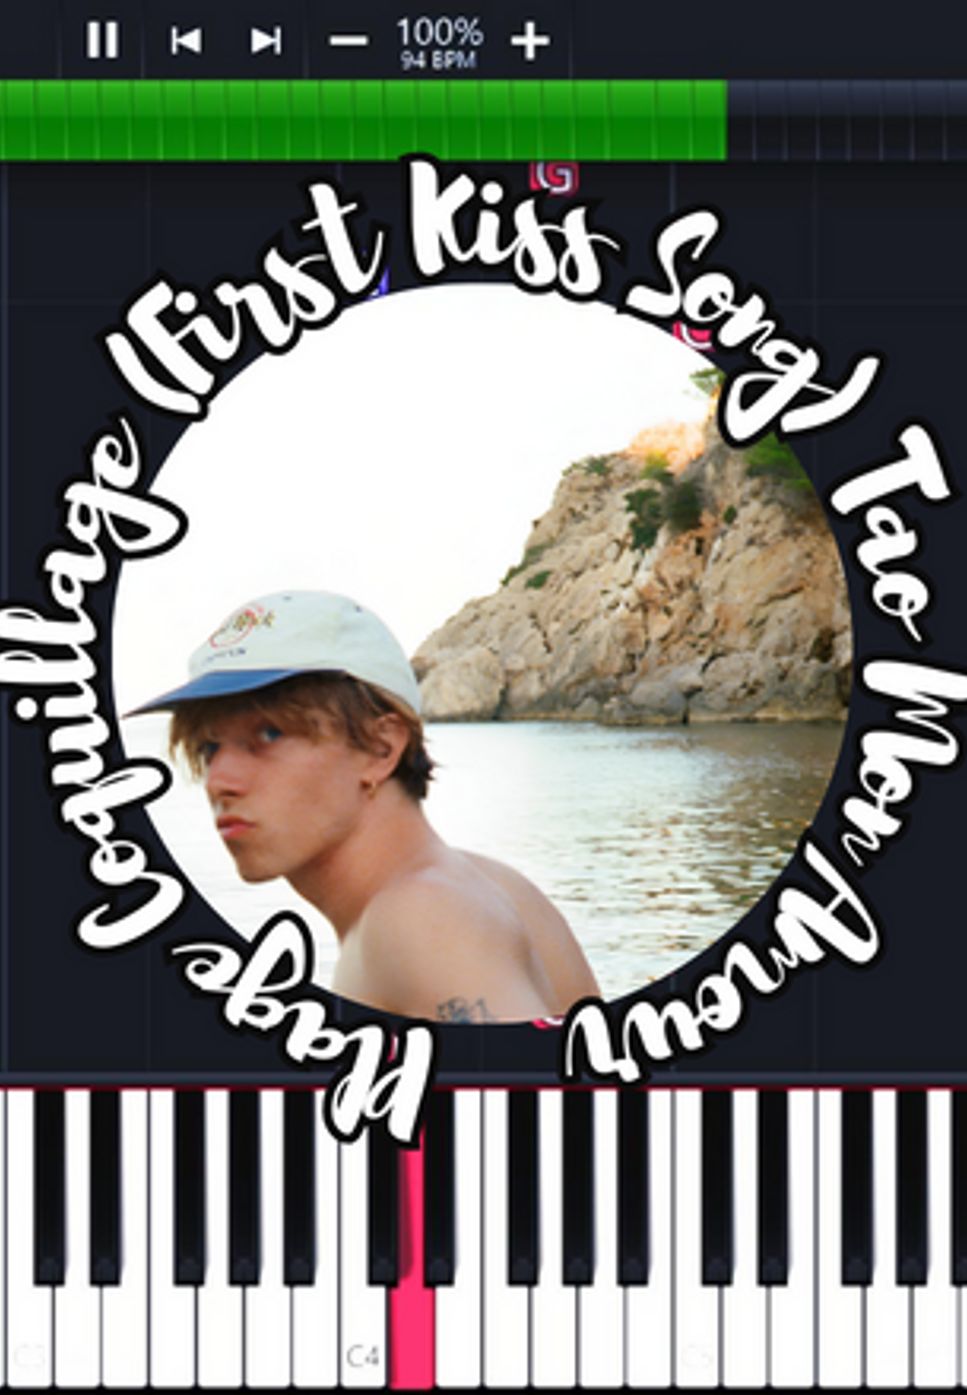 Tao Mon Amour - Seashell Beach (First Kiss Song) (easy ver. / sad song / lofi) by Marco D.